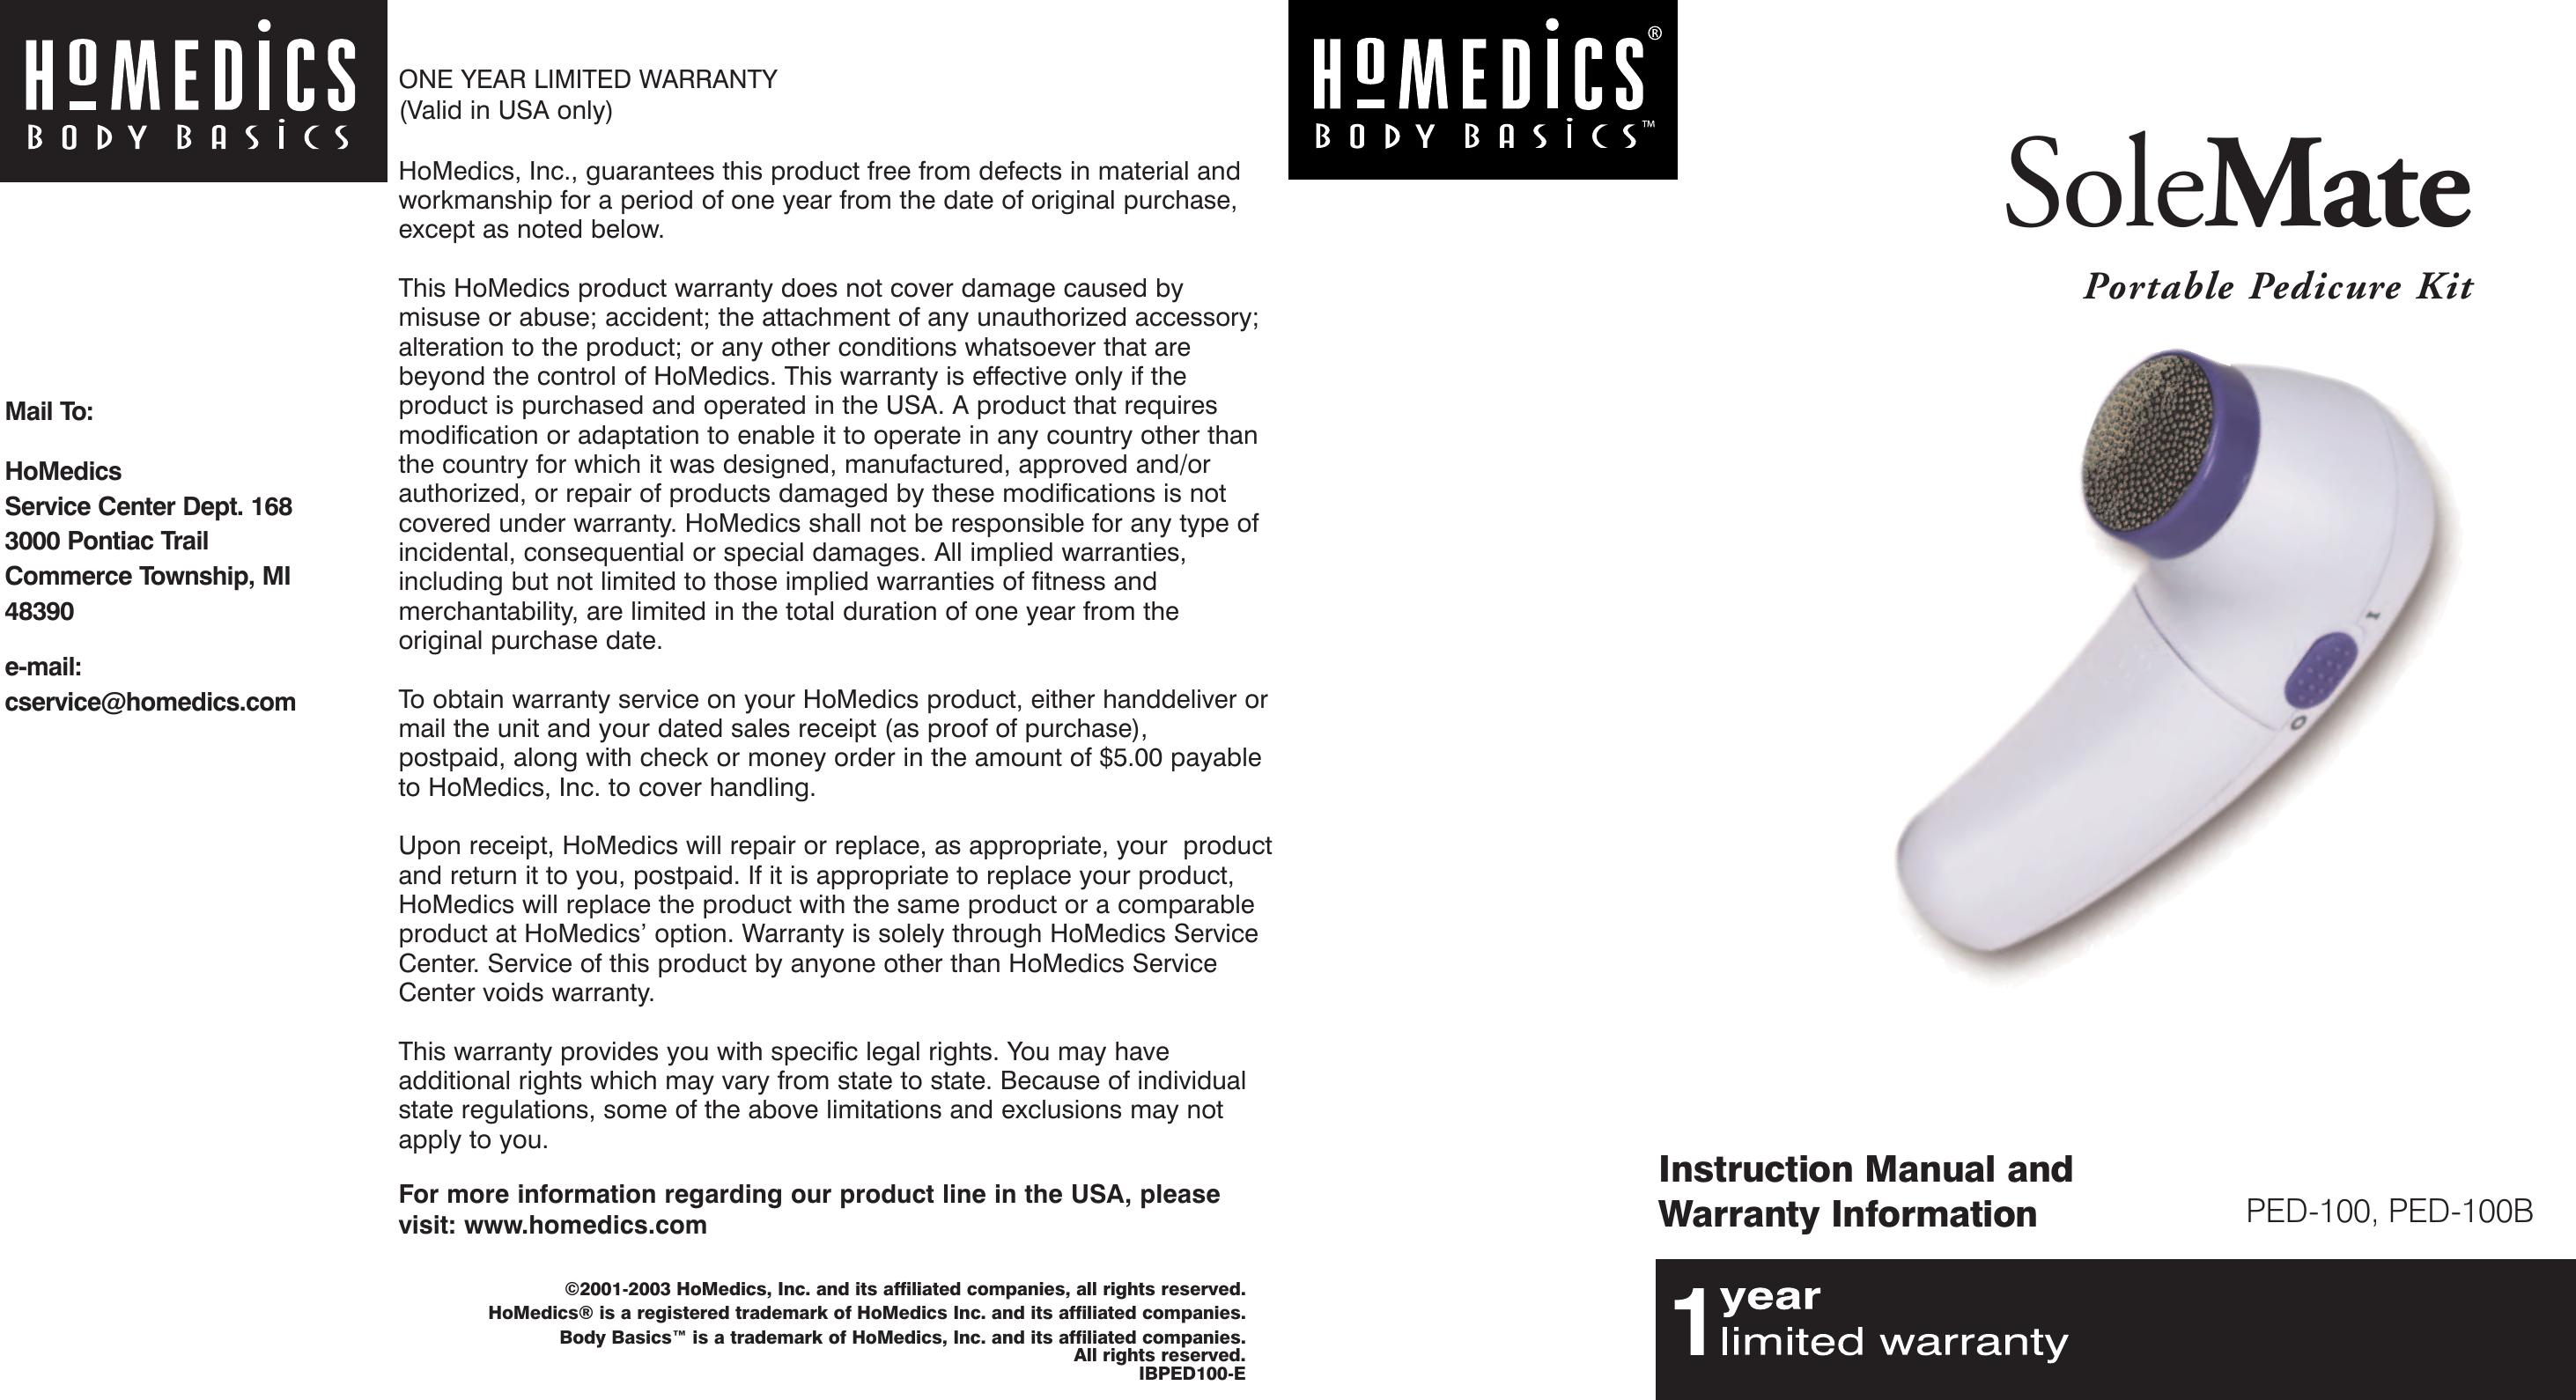 HoMedics PED-100 Pedicure Spa User Manual